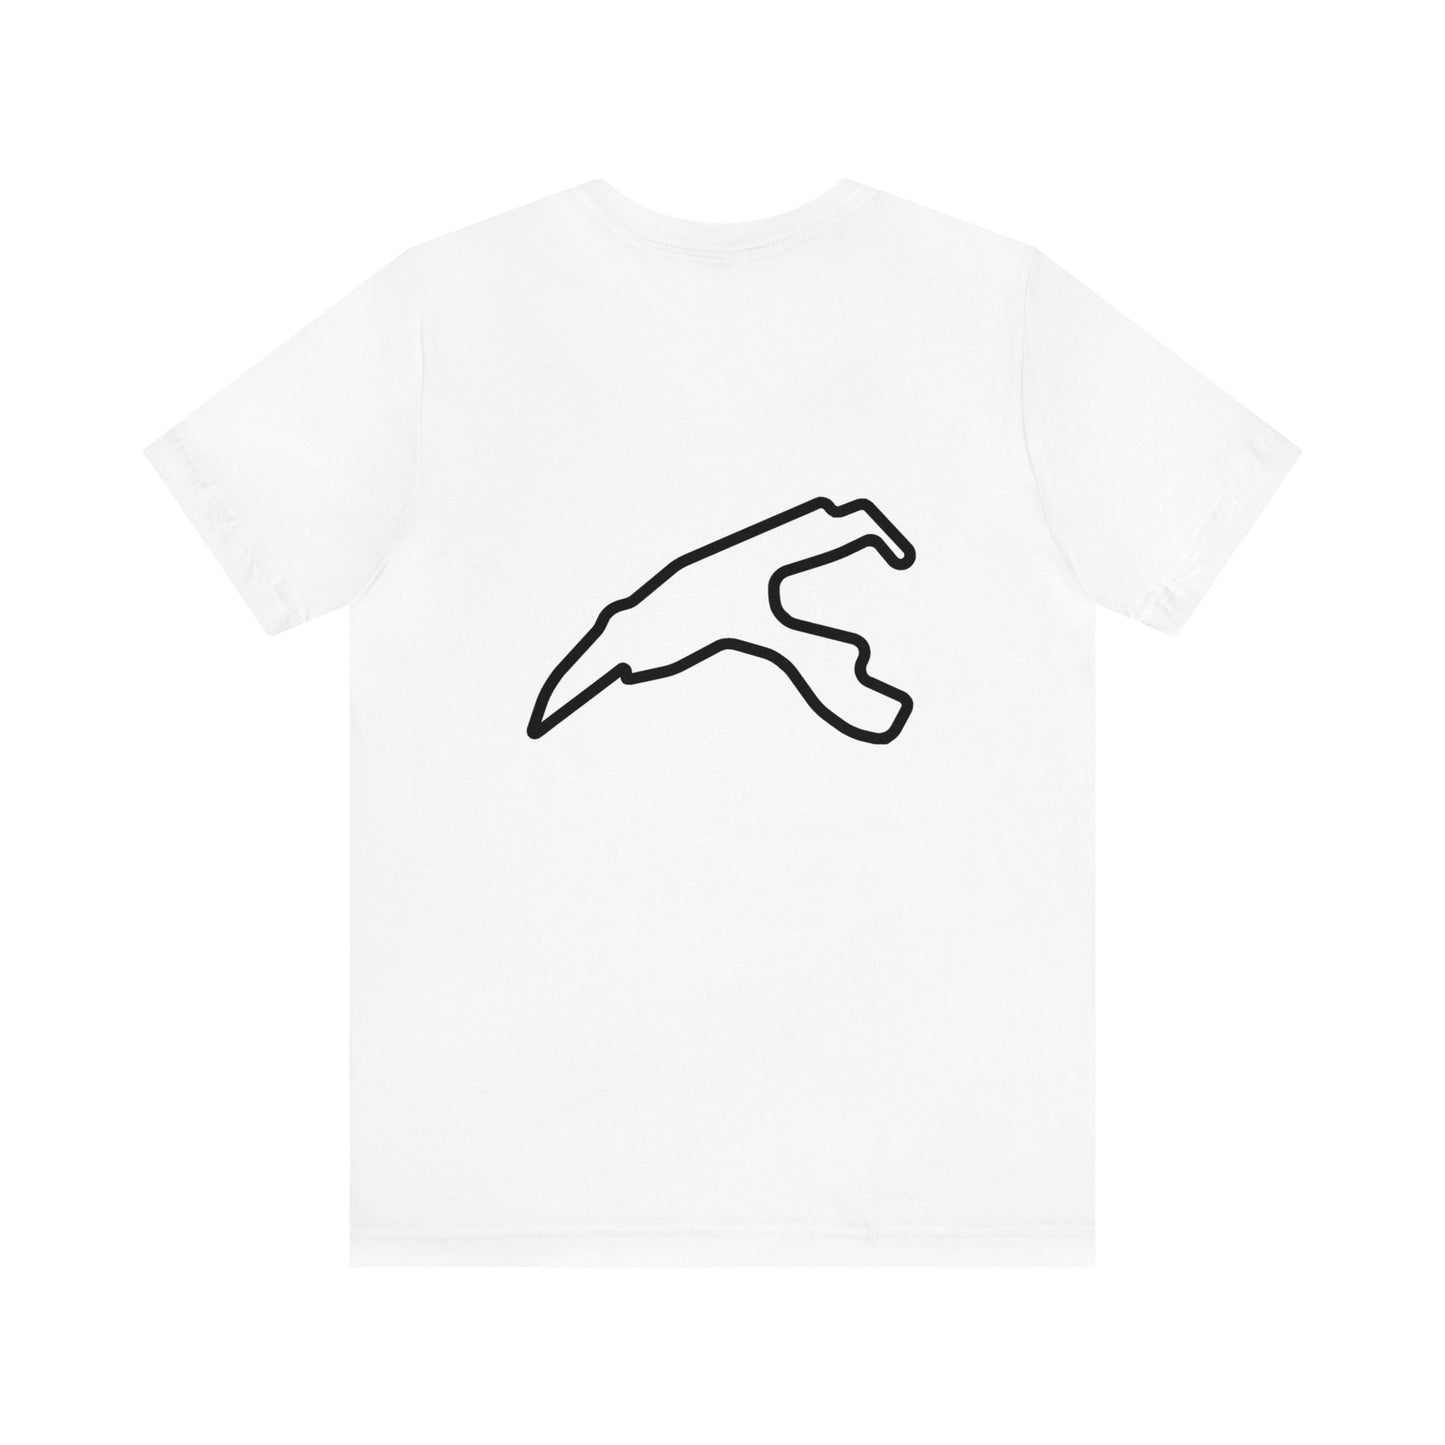 Unisex Belgian Grand Prix T-Shirt